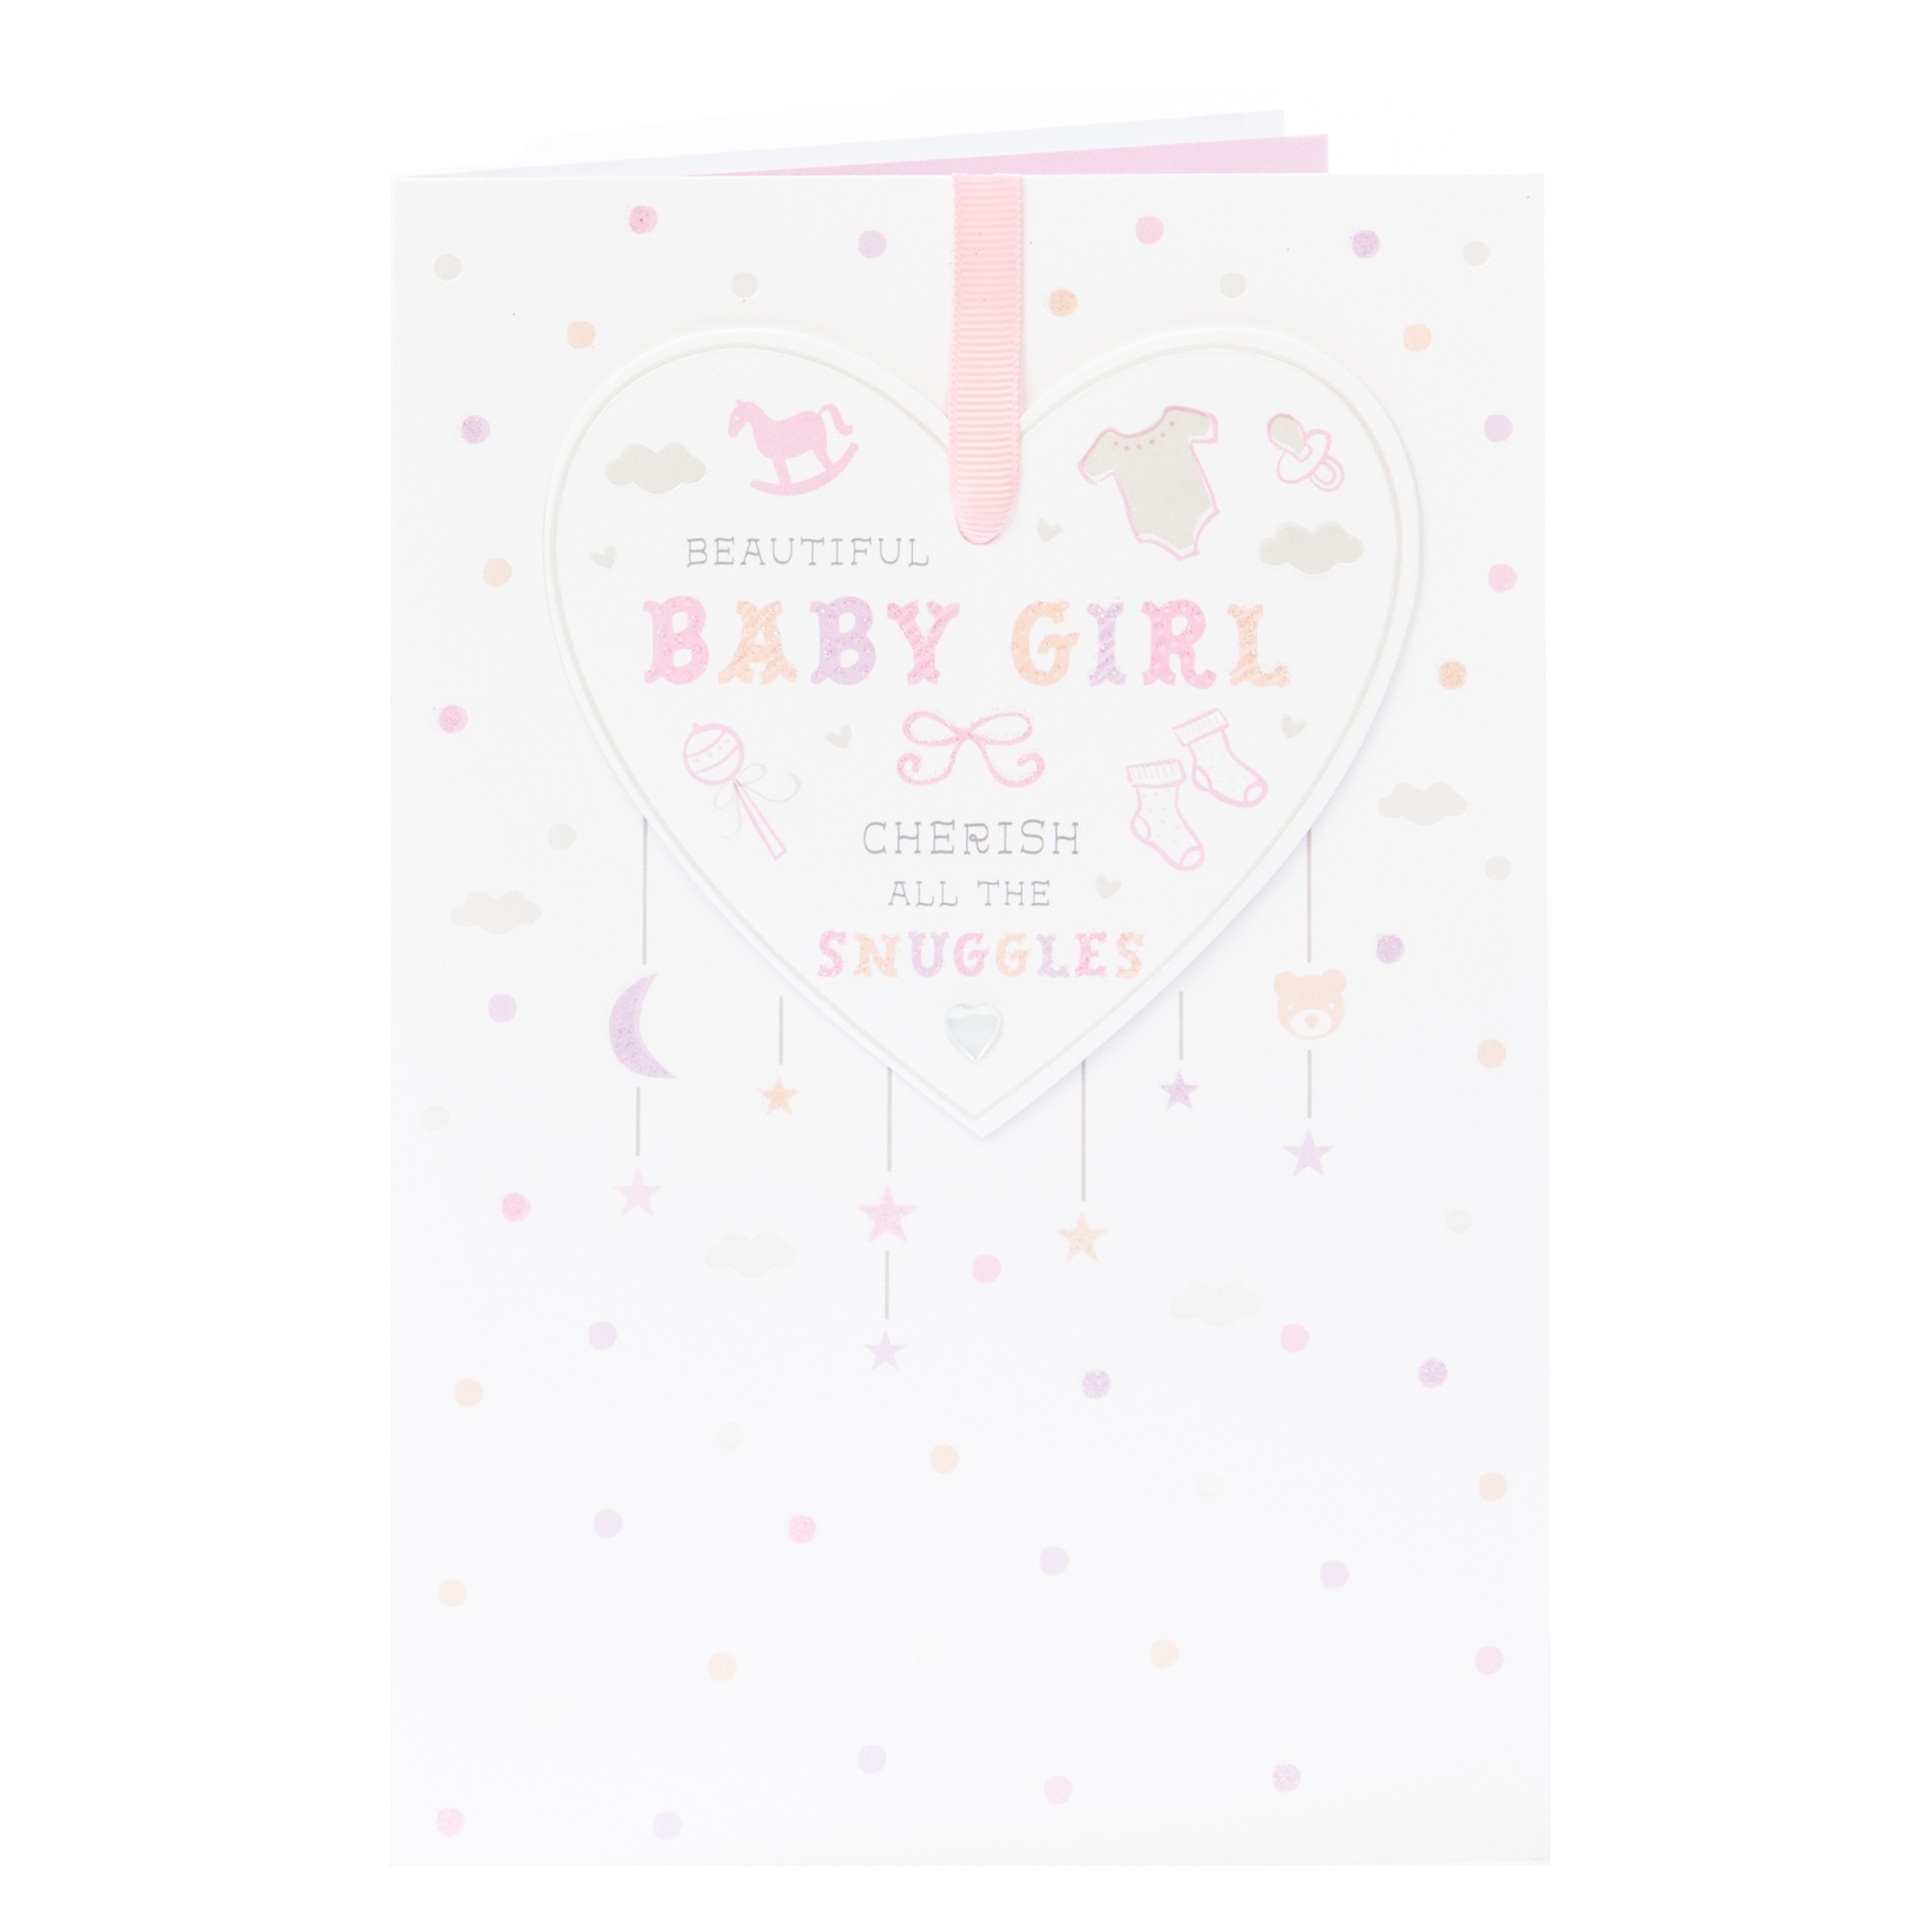 New Baby Card - Girl, Cherish The Snuggles